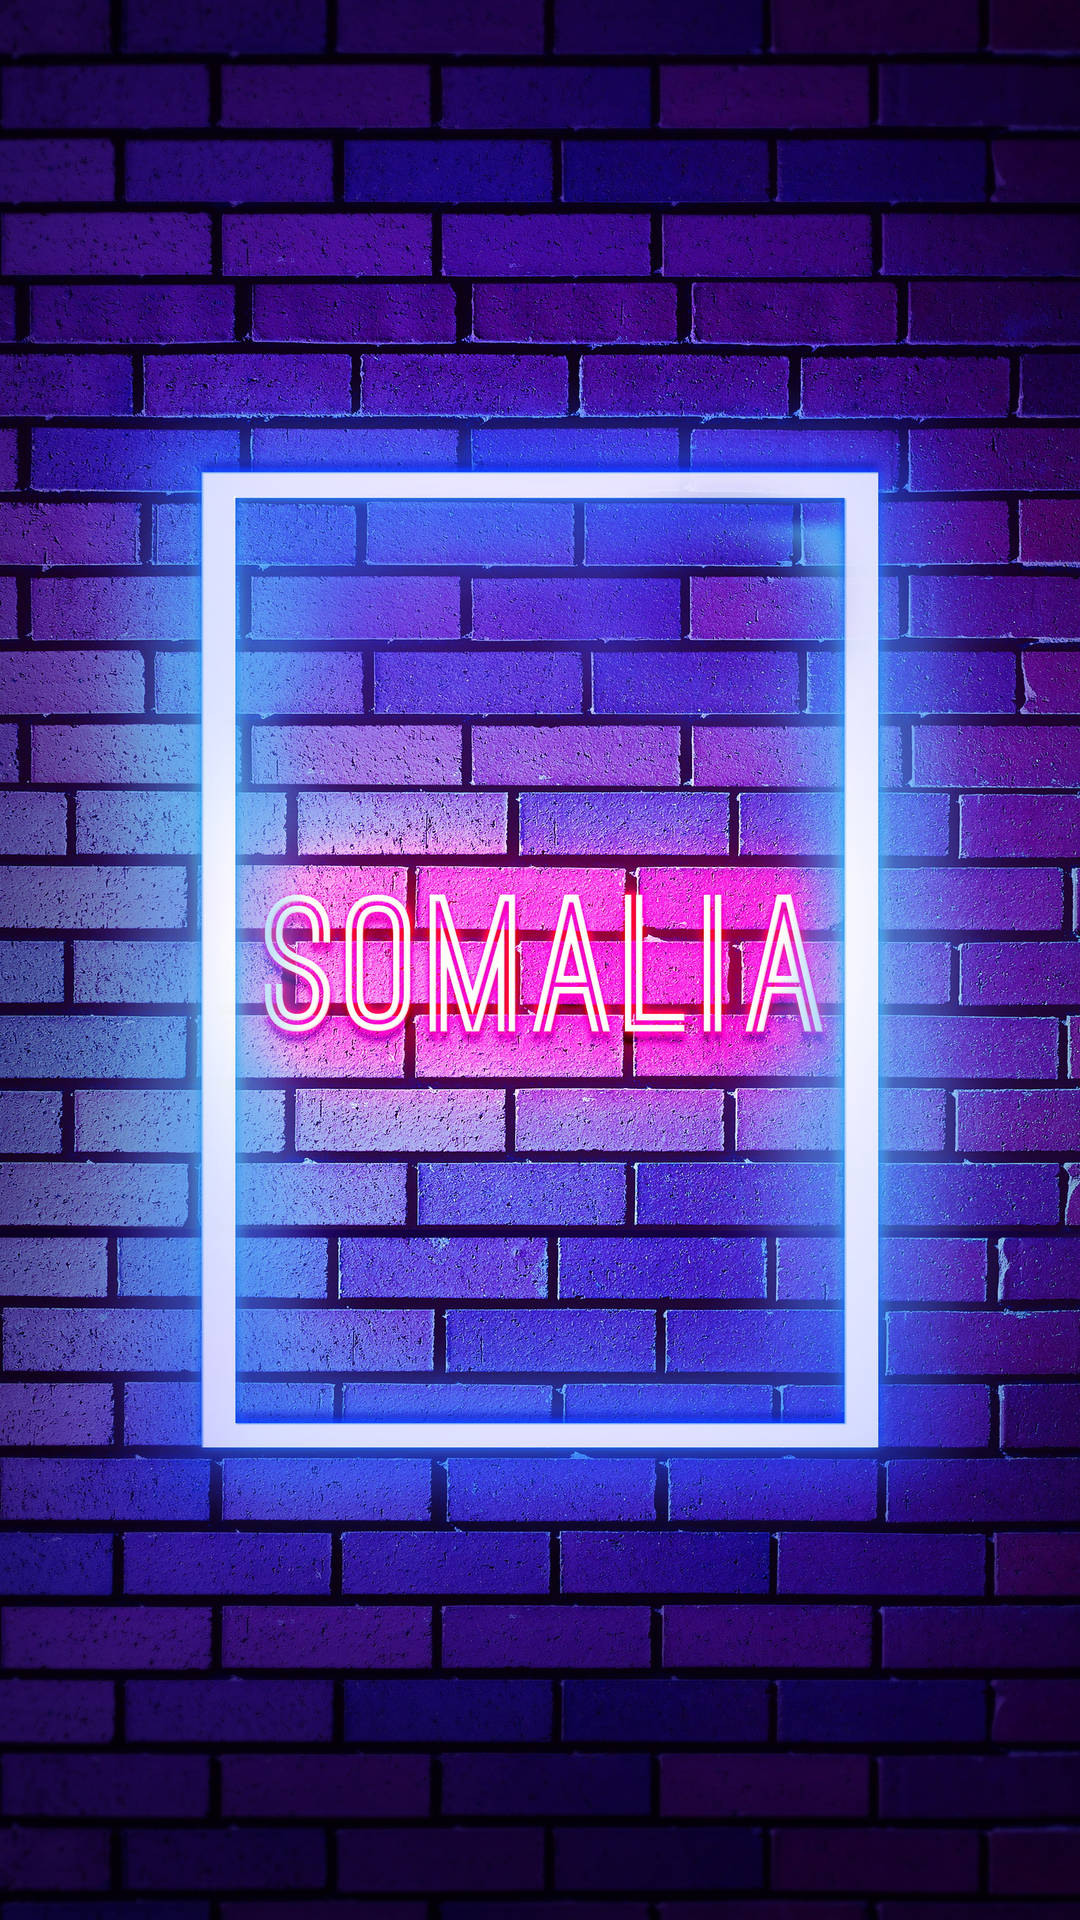 Somaliablaues Neon. Wallpaper